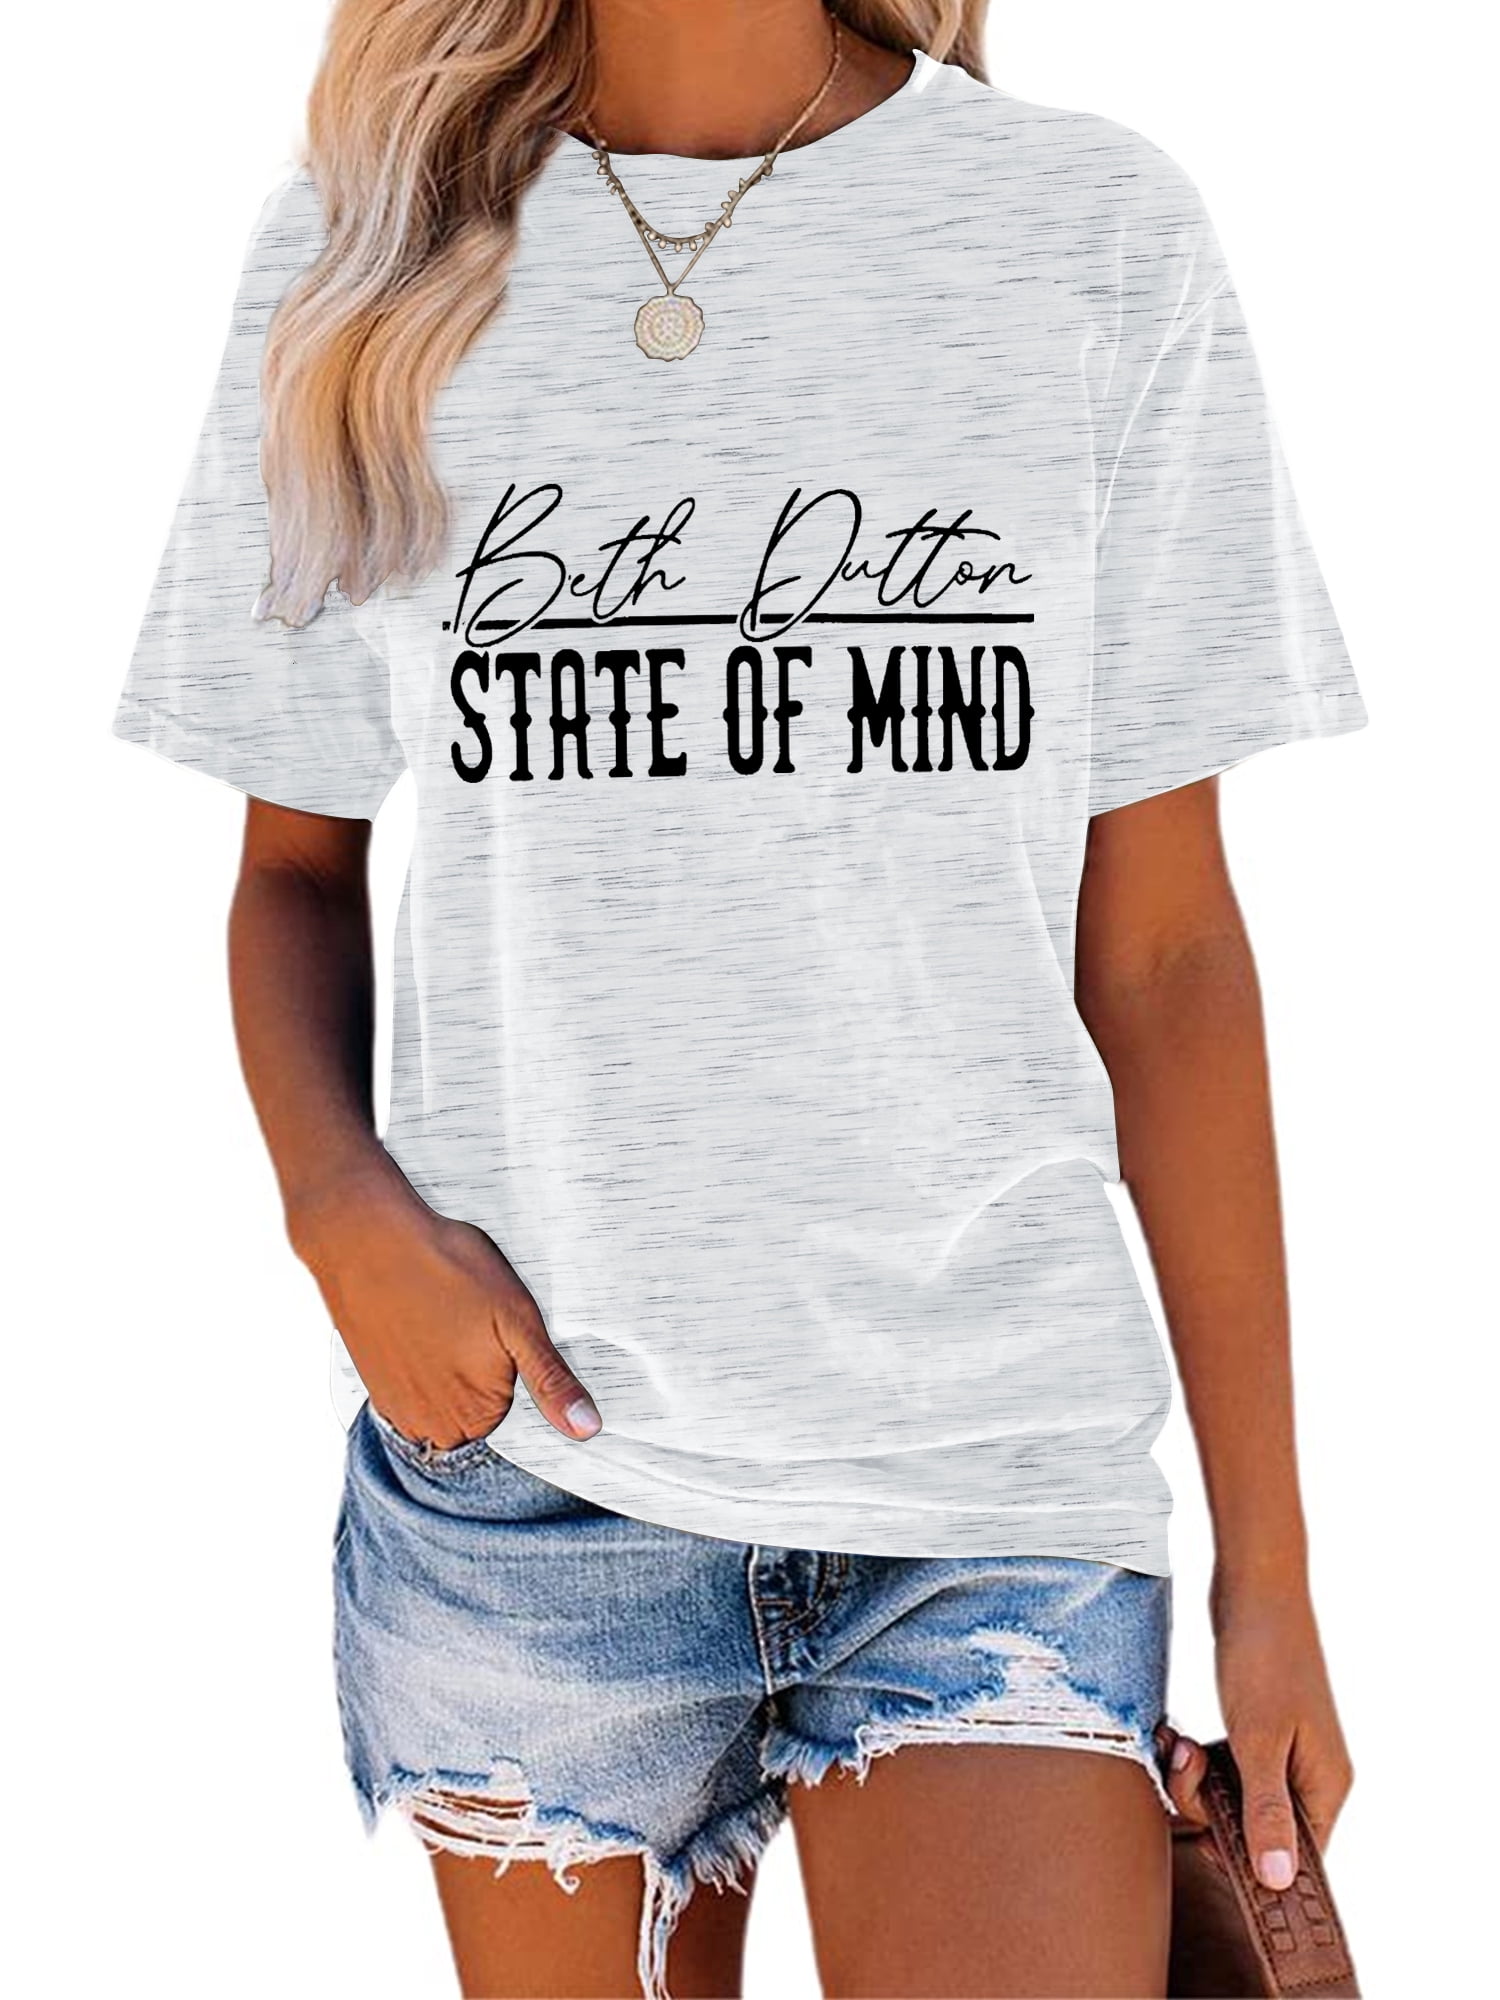 Anbech Beth Dutton Shirts for Women Yellowstone Shirt Graphic Short ...